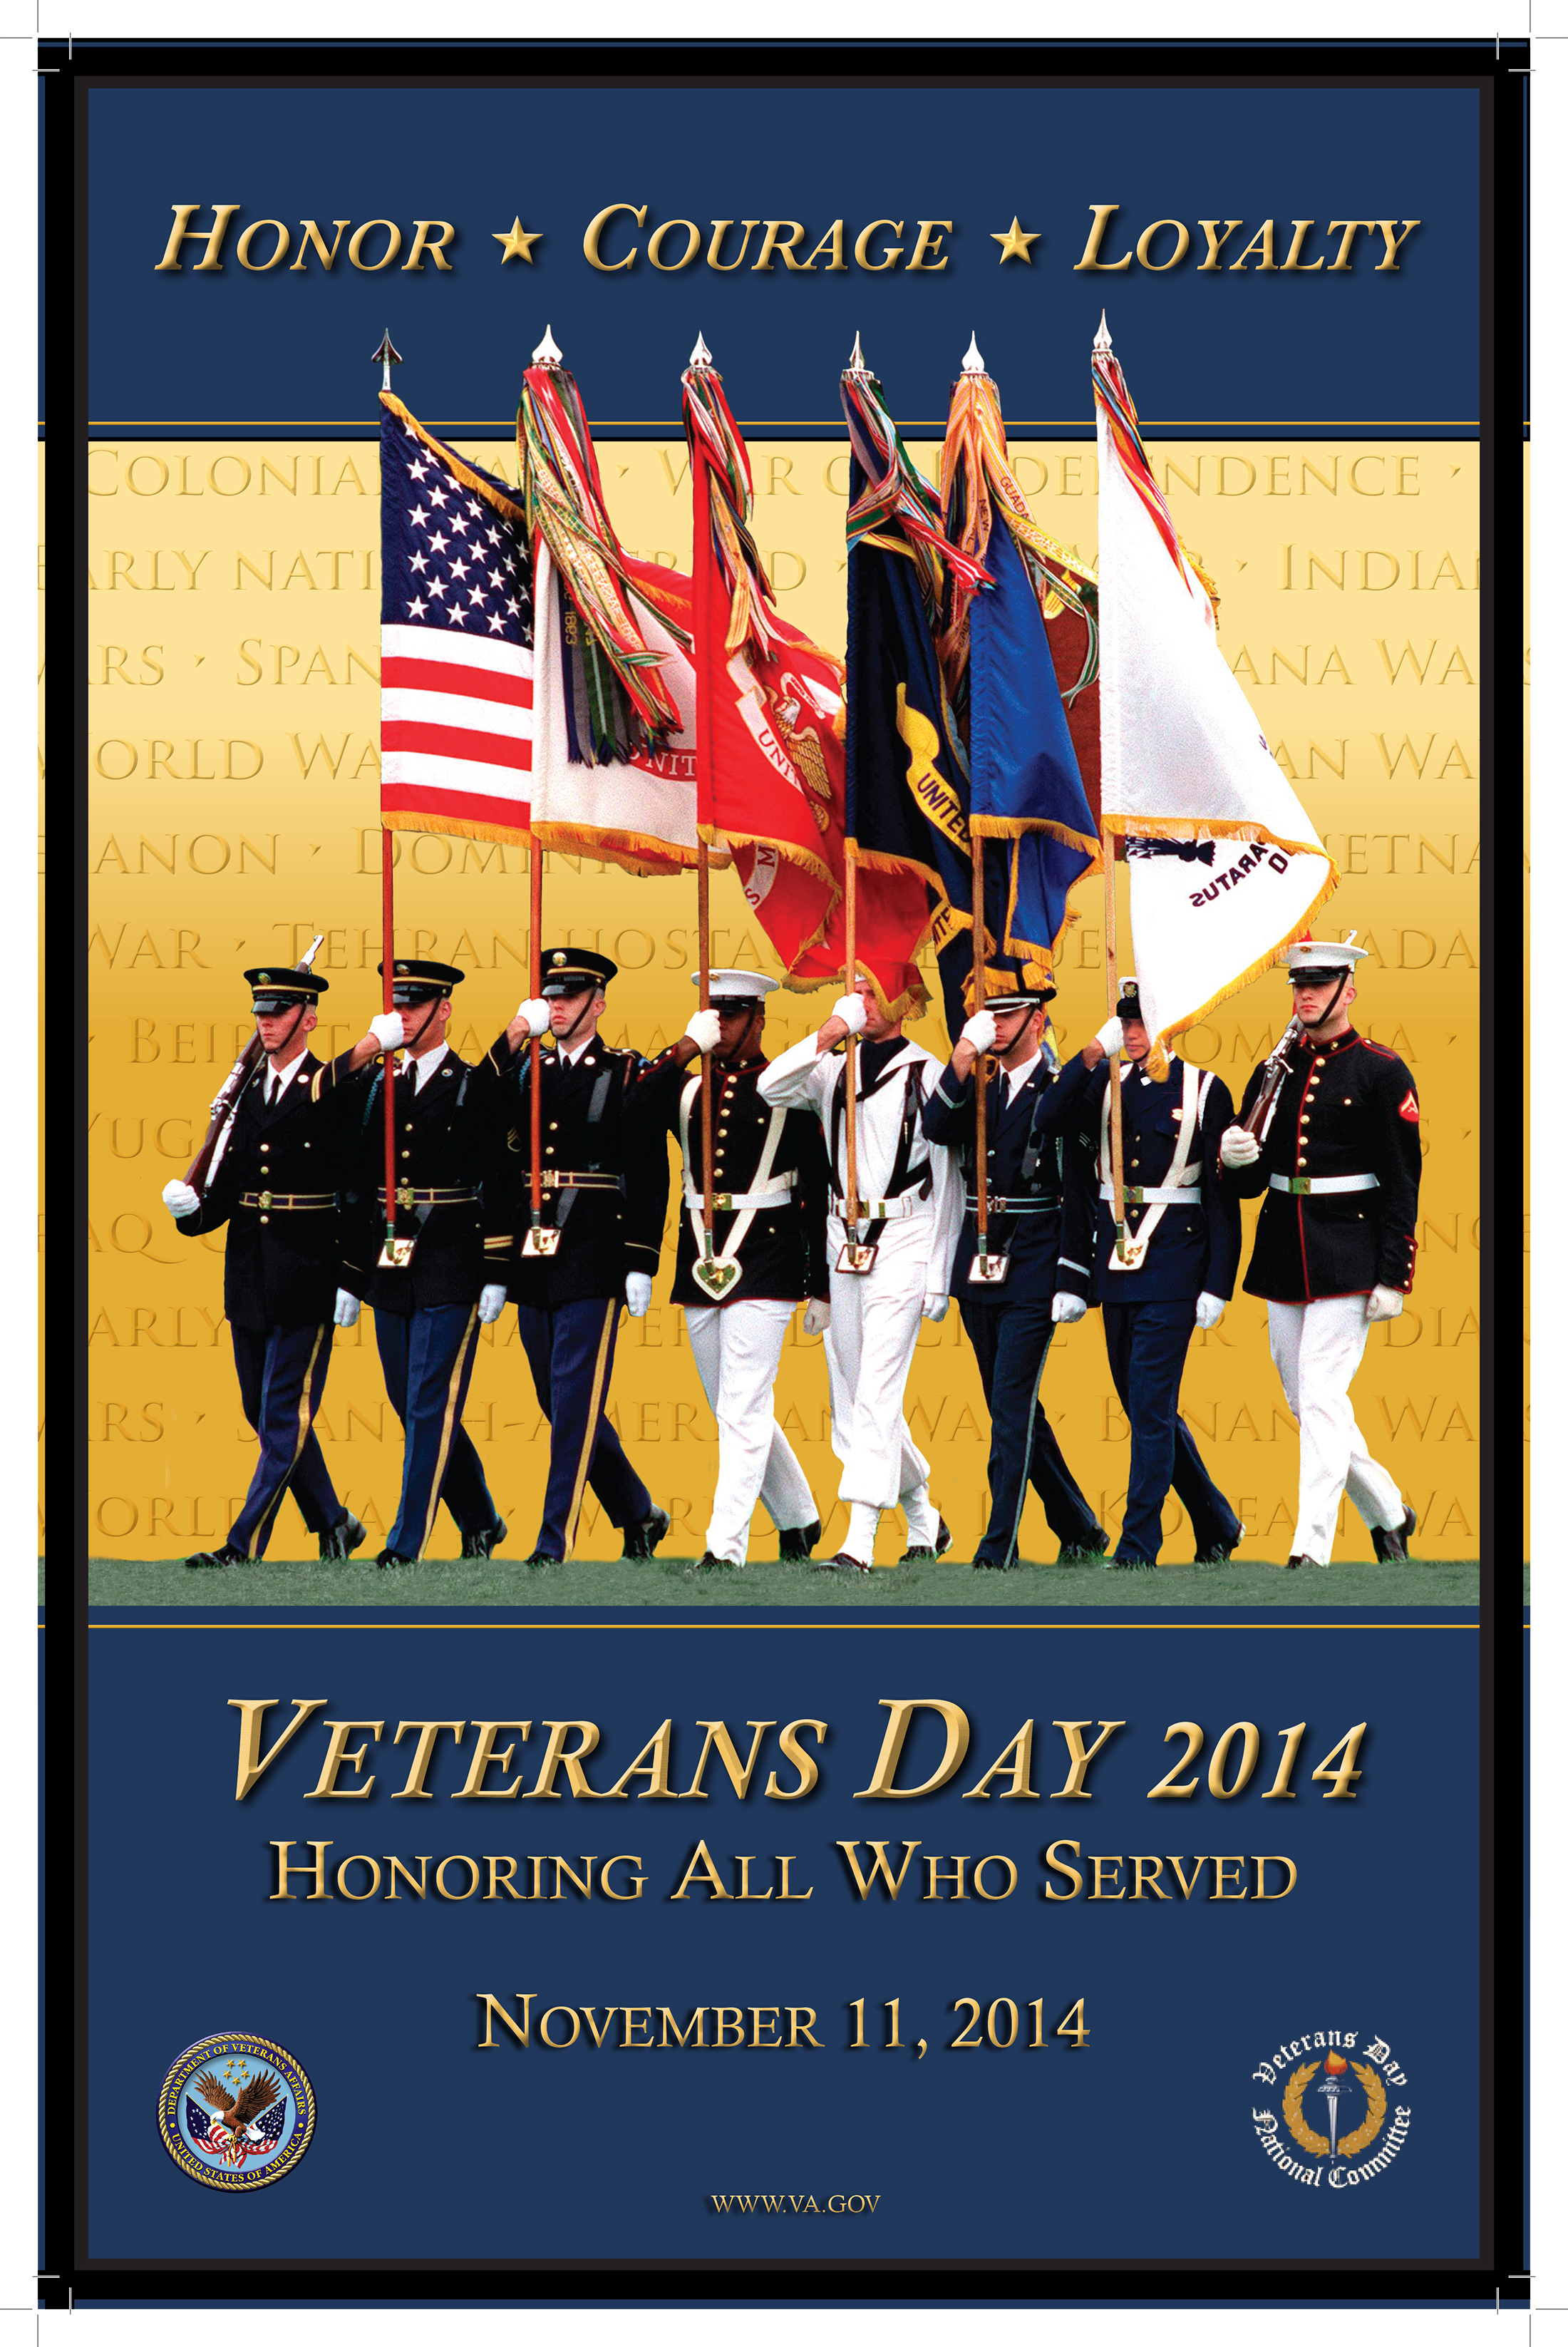 VA.gov Veterans' Day 2014 poster